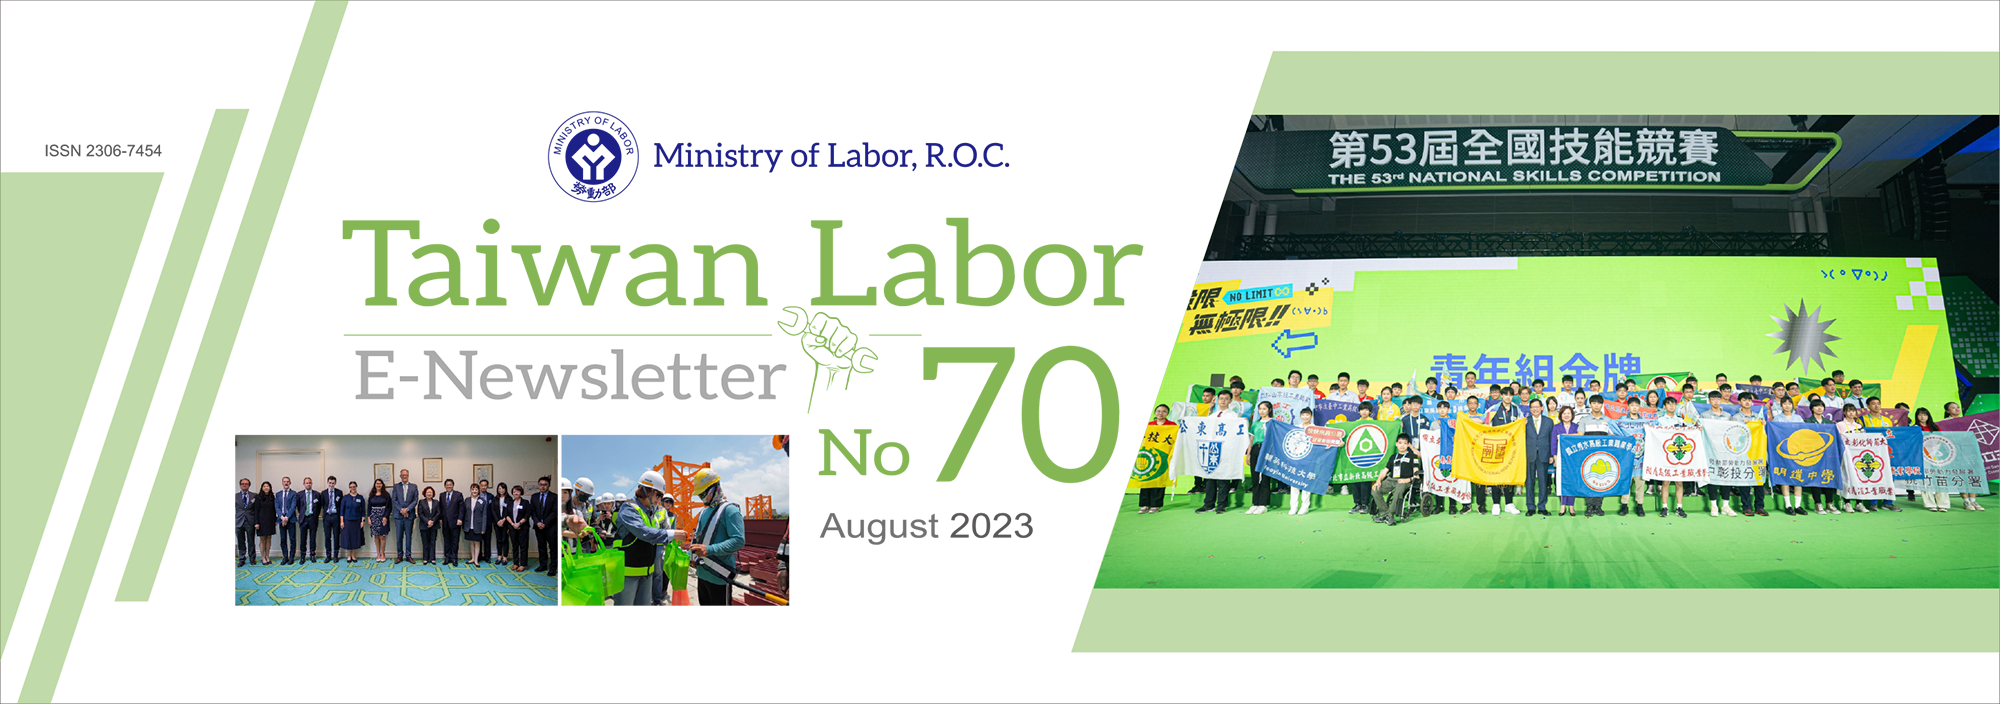 Taiwan Labor E-Newsletter No.70 Banner